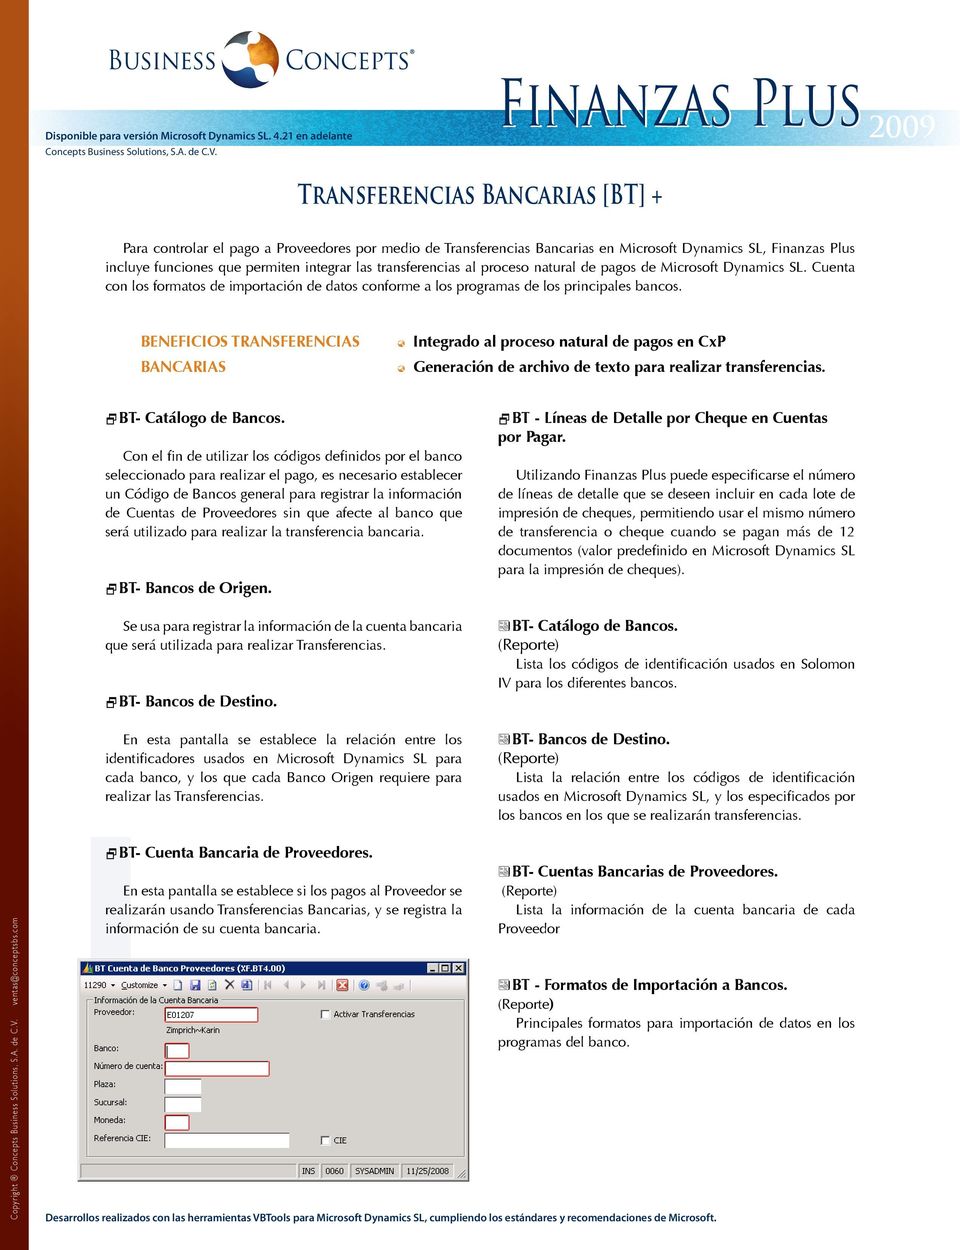 BENEFICIOS TRANSFERENCIAS BANCARIAS Integrado al proceso natural de pagos en CxP Generación de archivo de texto para realizar transferencias. 2BT- Catálogo de Bancos.